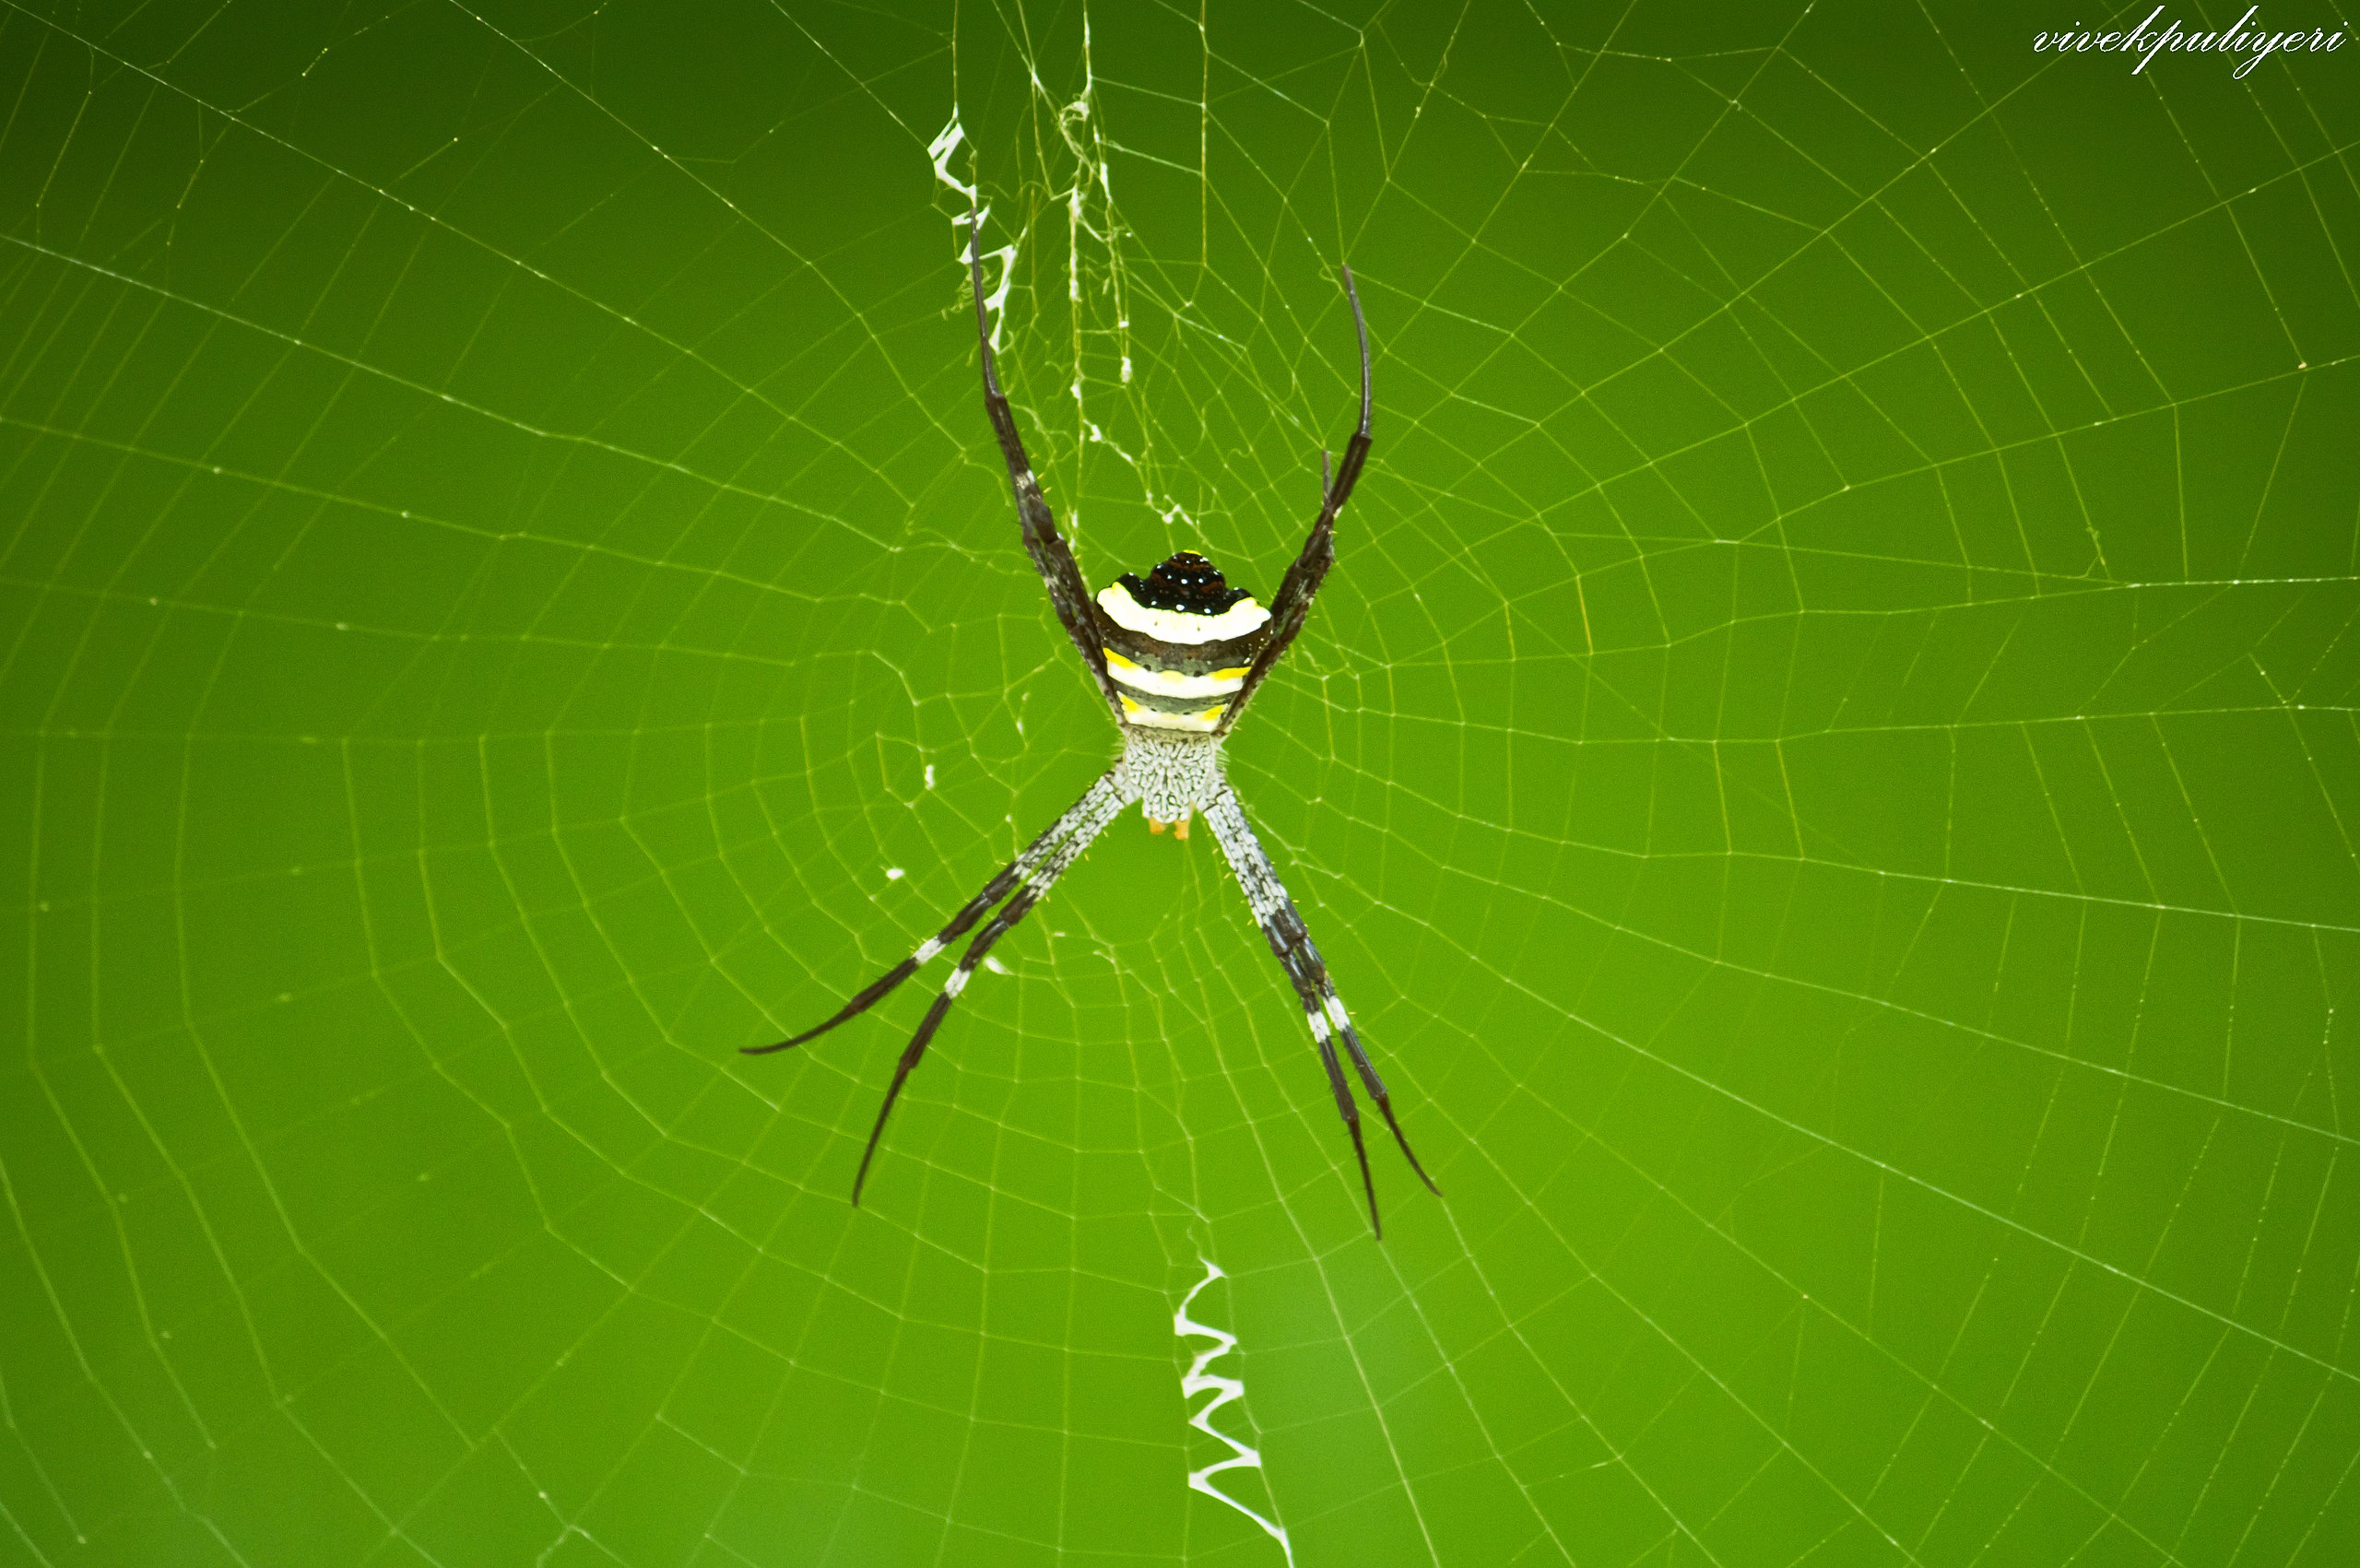 File:Argiope anasuja spider.jpg - Wikipedia